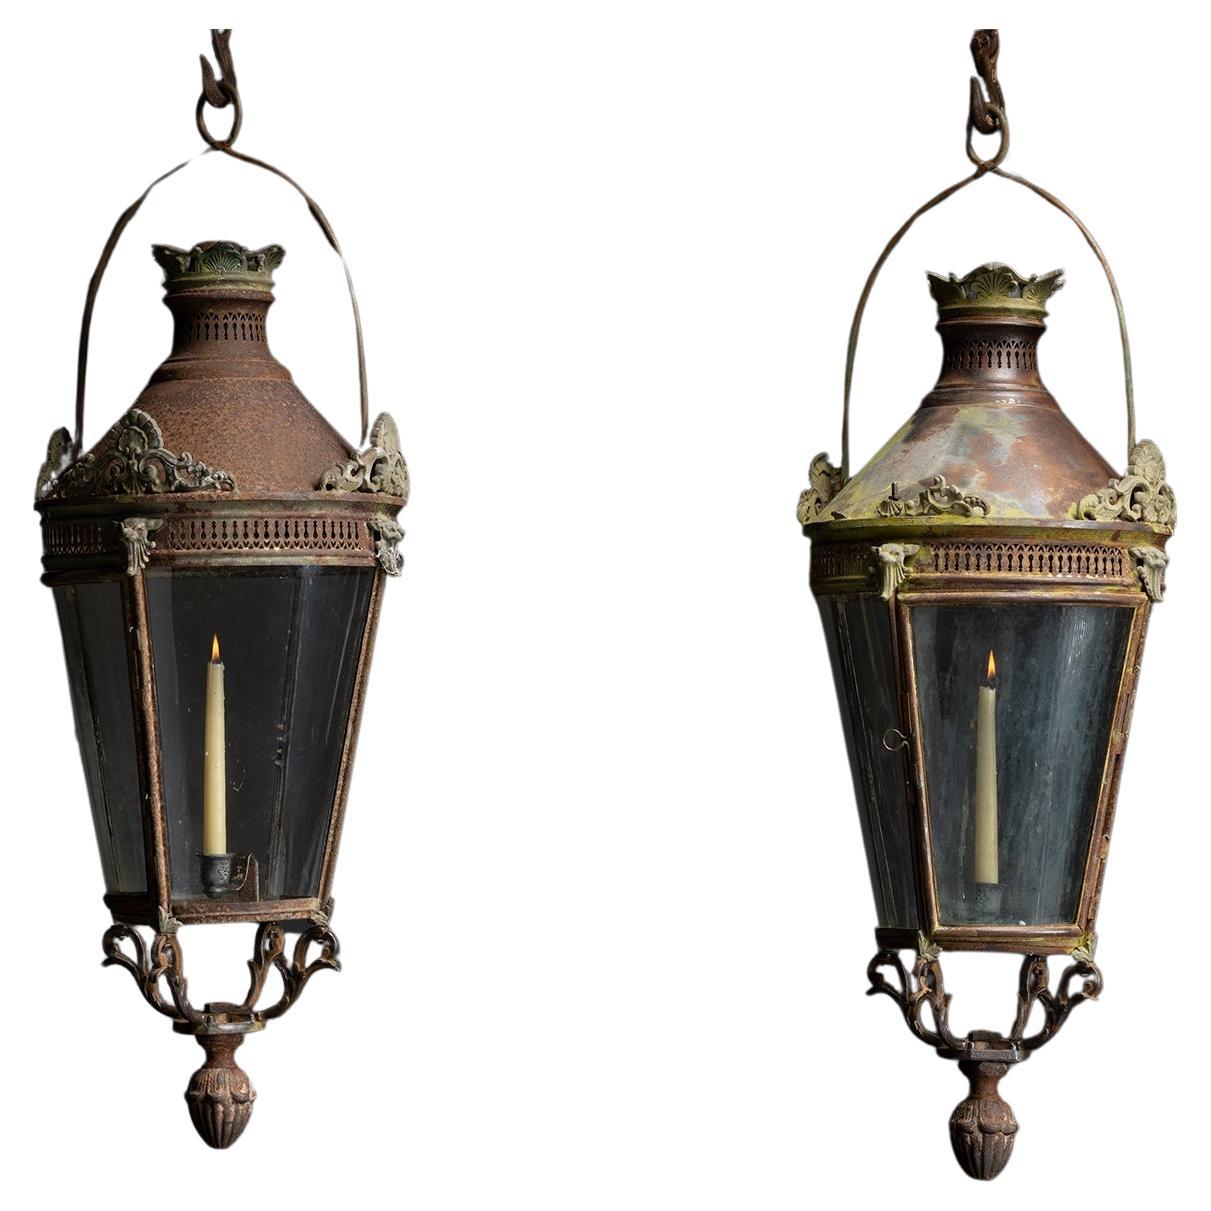 Verdigris Lanterns, Italy circa 1850